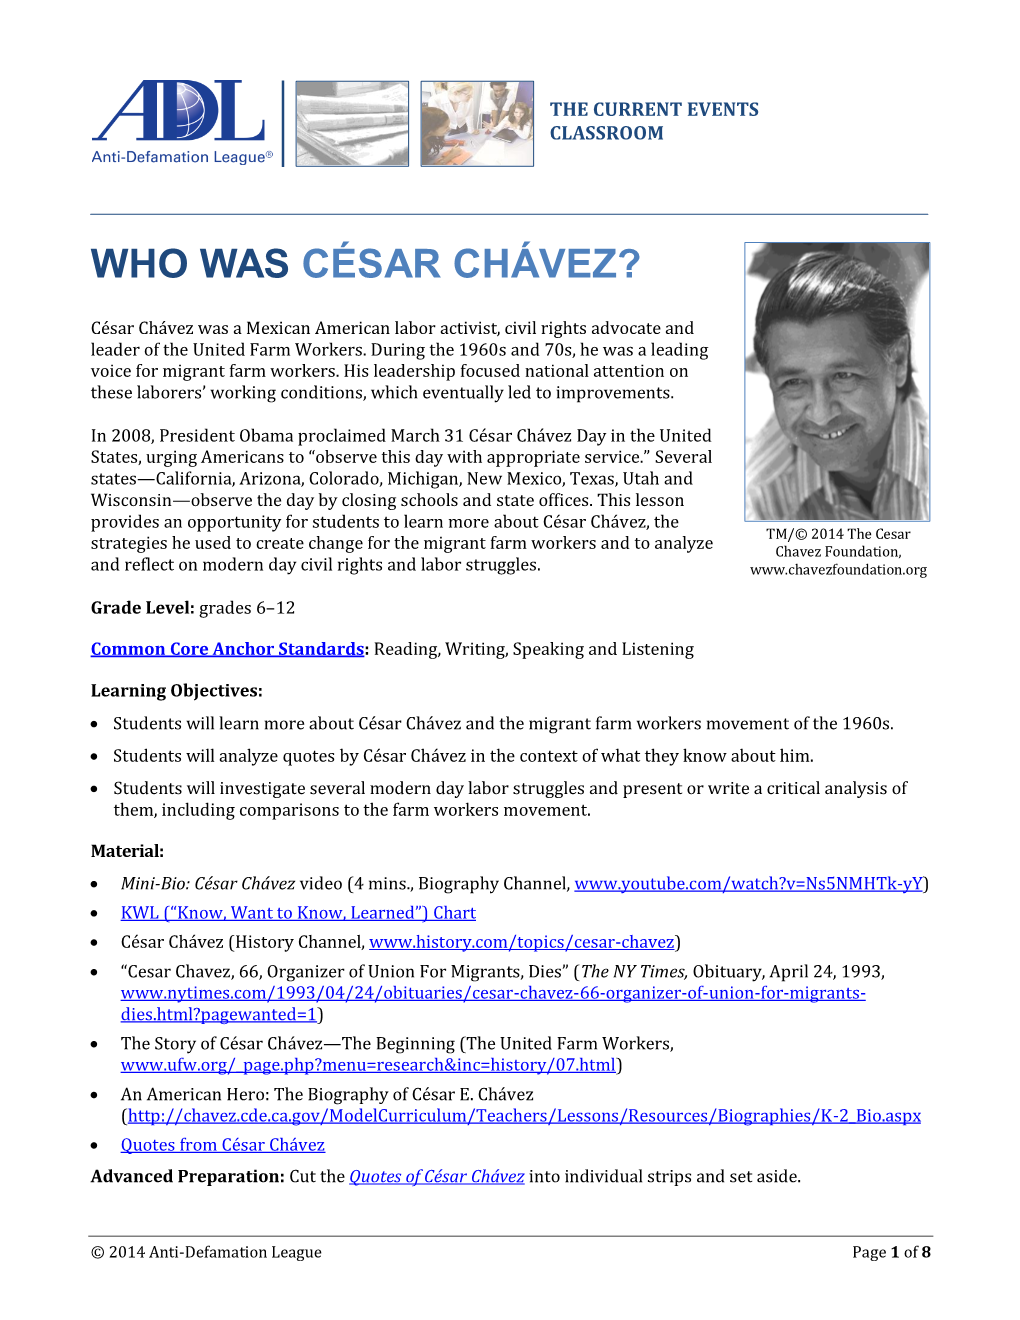 Who Was César Chávez?